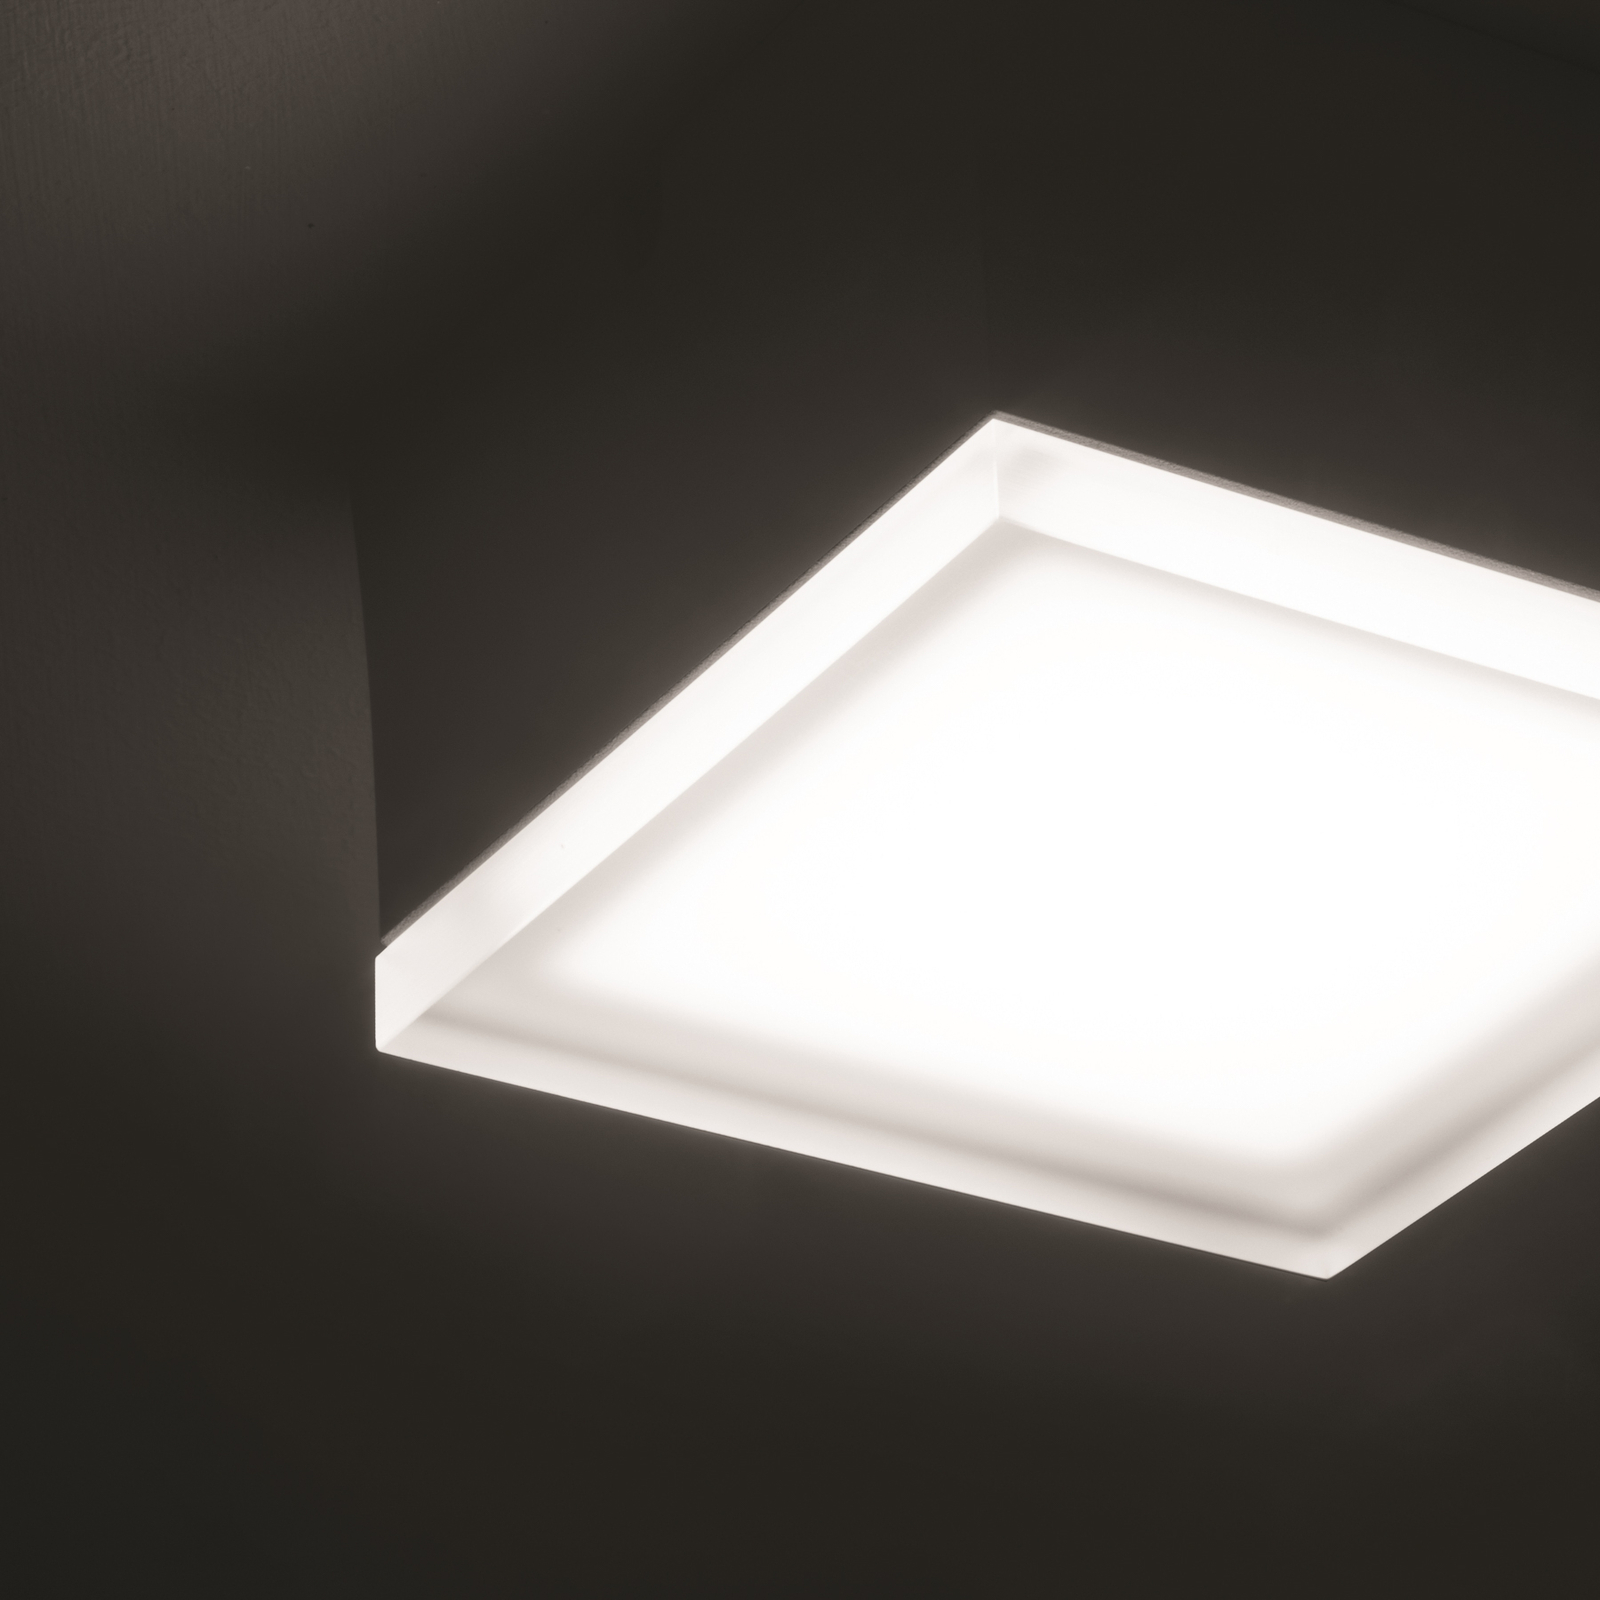 LED-Außenwandlampe 1425 graphit 12,5 x 12,5cm